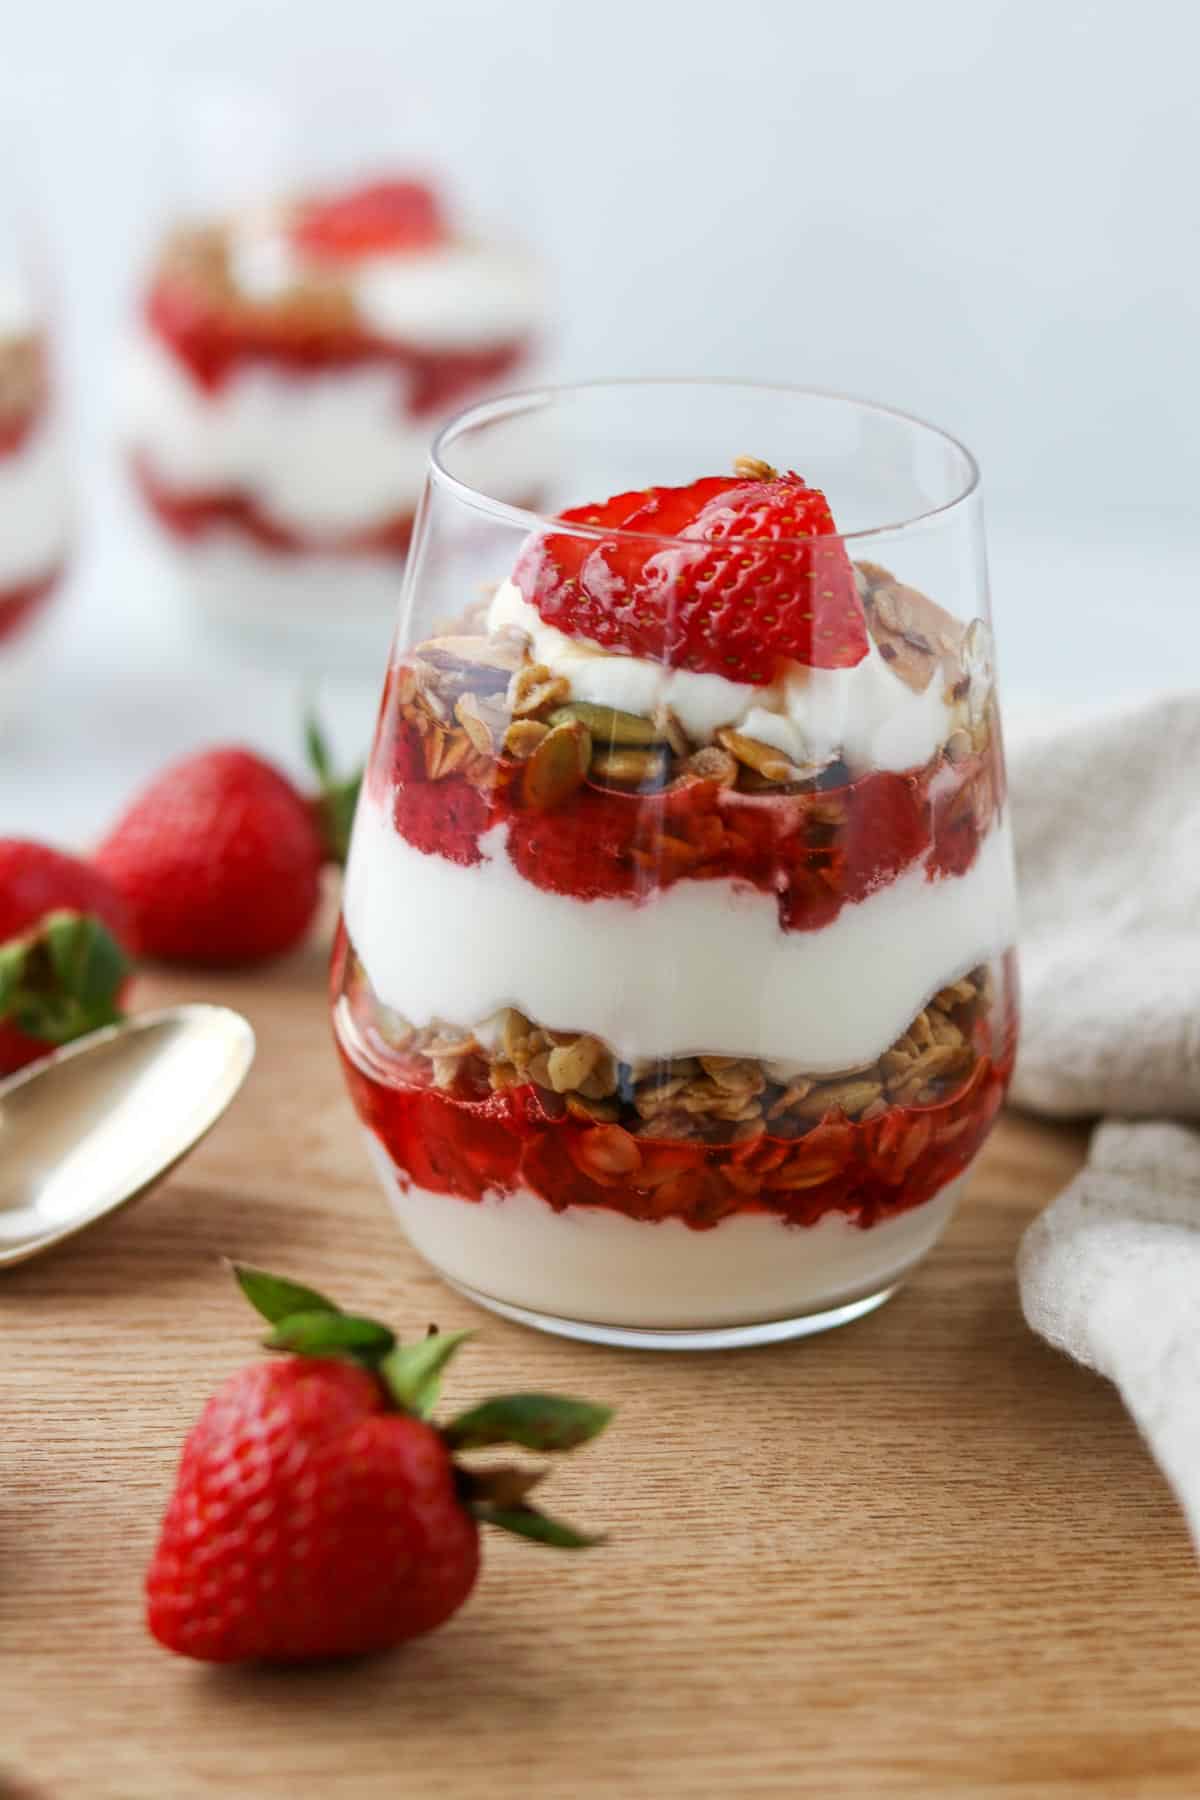 Yogurt, granola and strawberry parfait in a glass next to fresh strawberries.